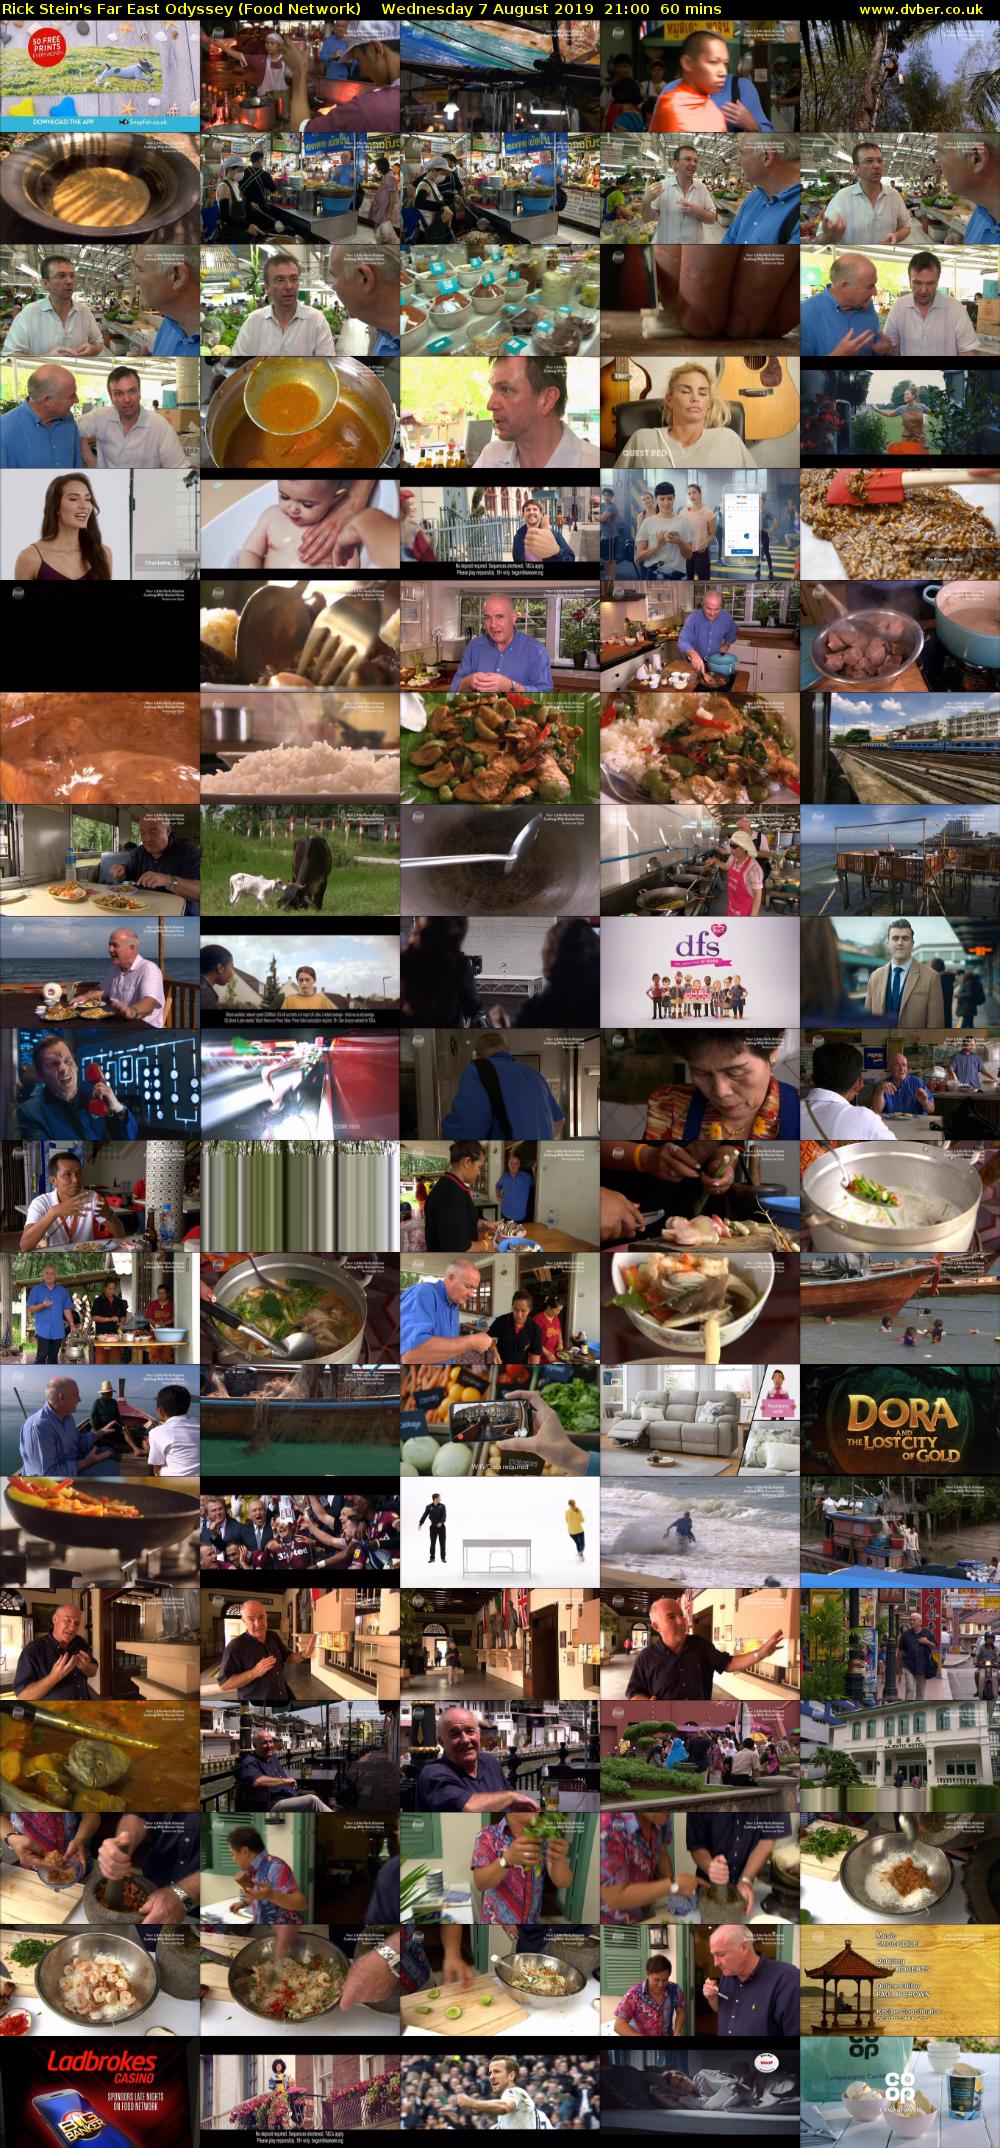 Rick Stein's Far East Odyssey (Food Network) Wednesday 7 August 2019 21:00 - 22:00